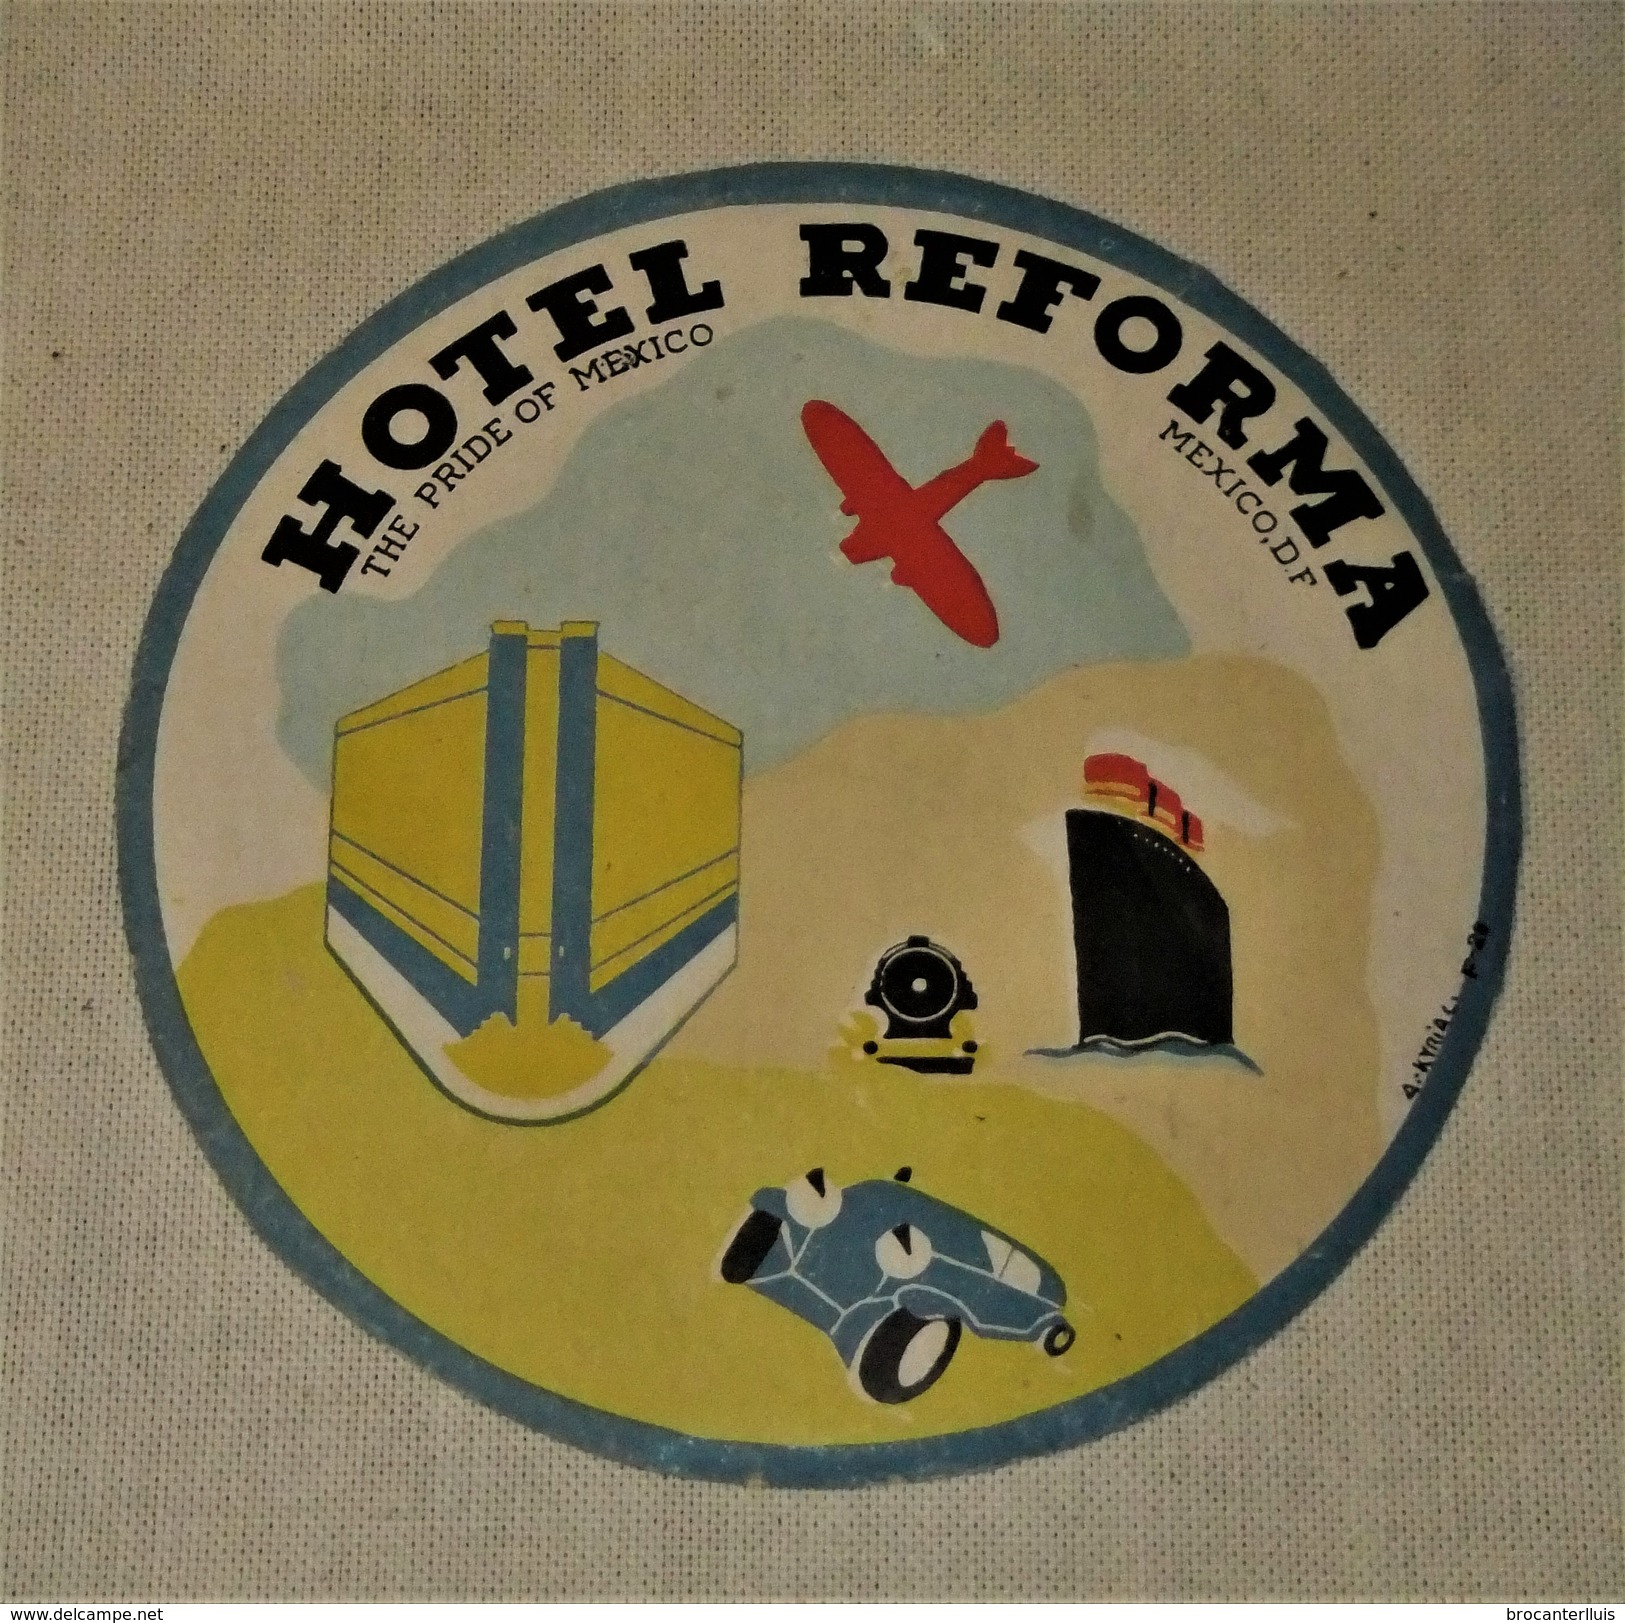 ETIQUETA HOTEL REFORMA THE PRIDE OF MEXICO MEXICO,D.F.   HOTEL REFORMA MEXICO,D.F. Tag For Luggage - Hotel Labels